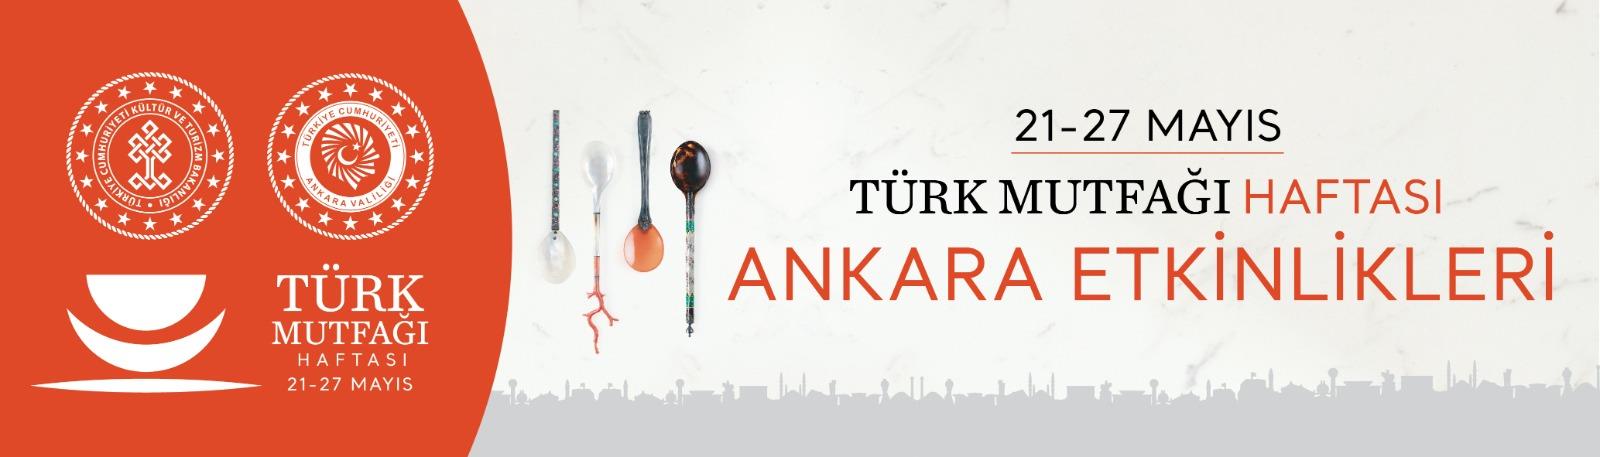 tmh Ankara Afişi yatay.jpg